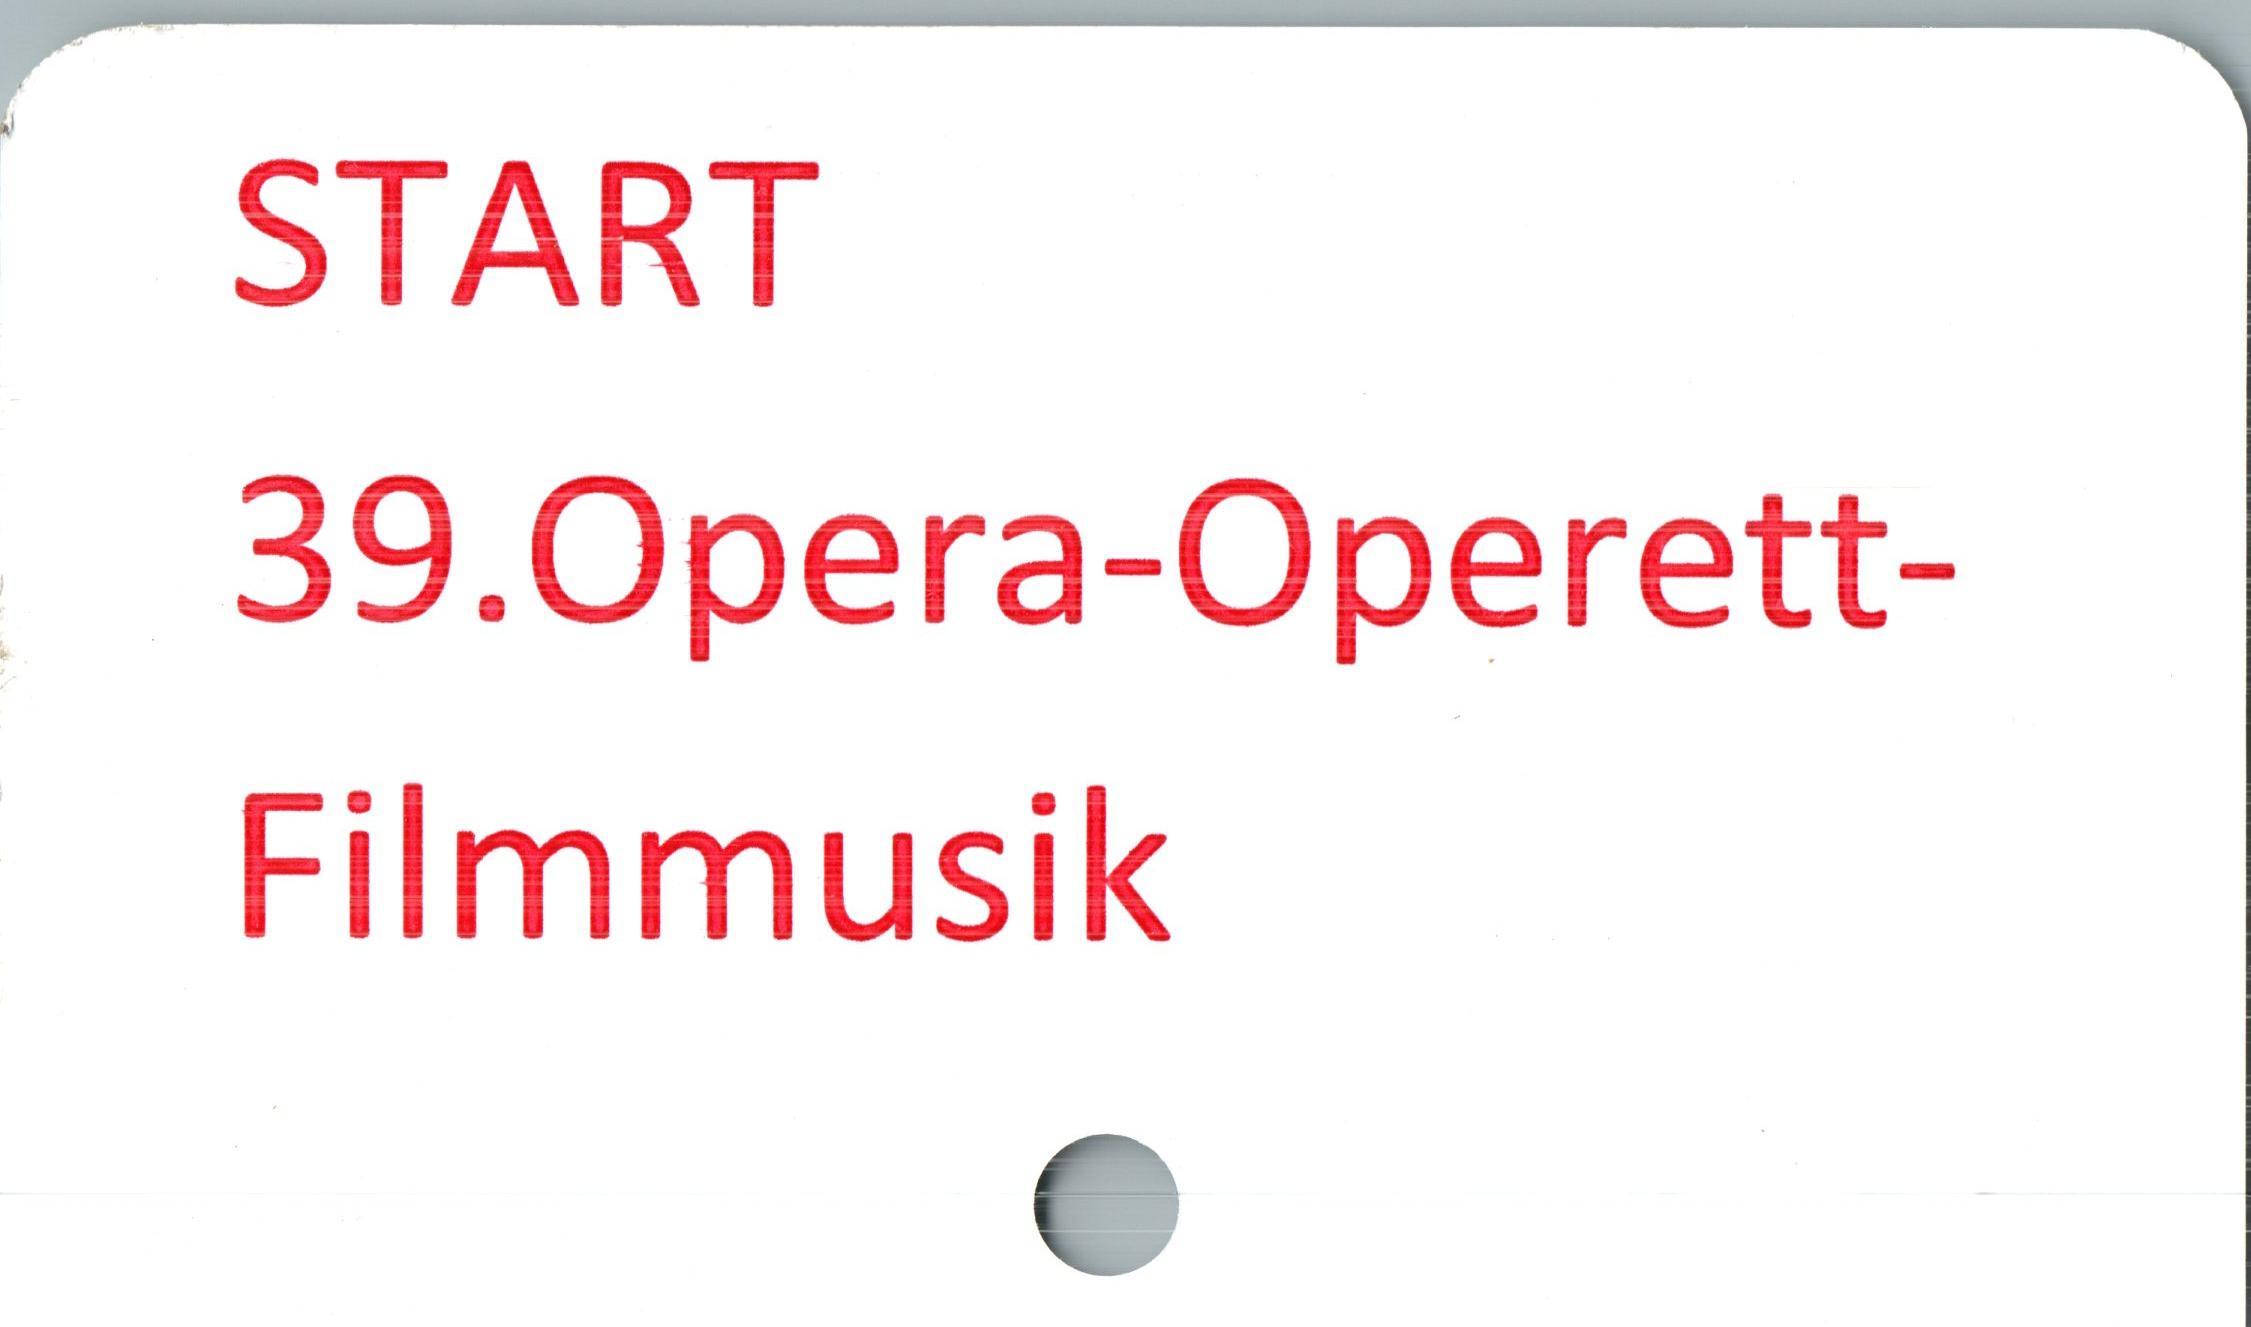  ﻿START 39.Opera-Filmmusik
1
Operett-